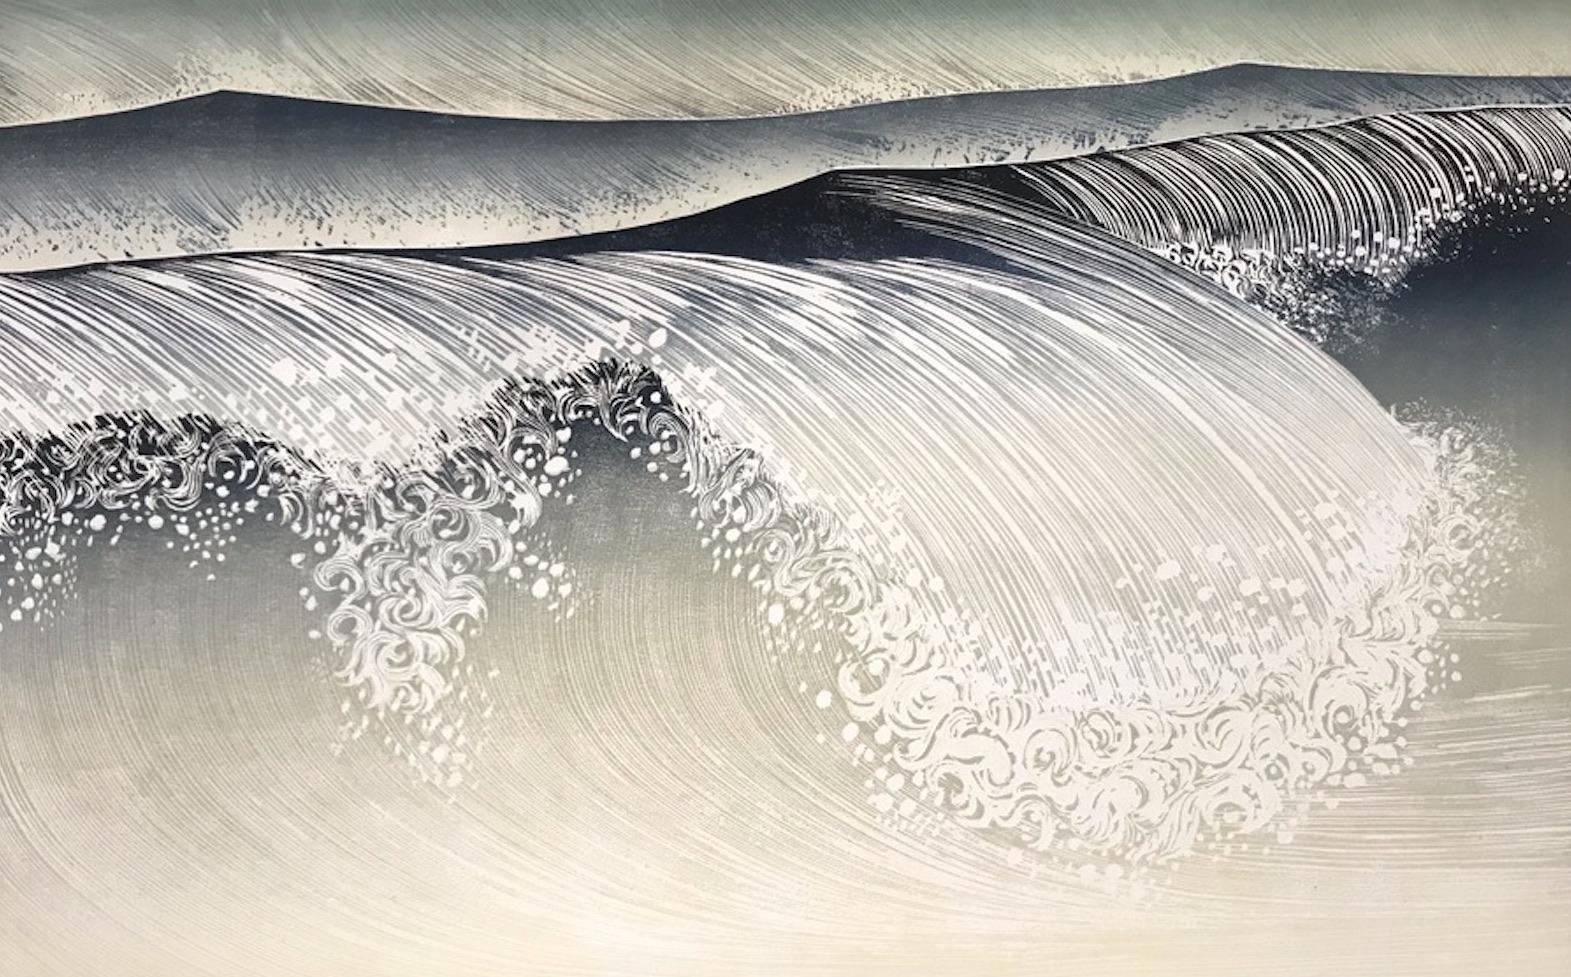 Rod Nelson  Landscape Print – Shorebreak-Holzschnitt im japanischen Stil, zeitgenössischer handgefertigter Meereslandschaftsdruck,